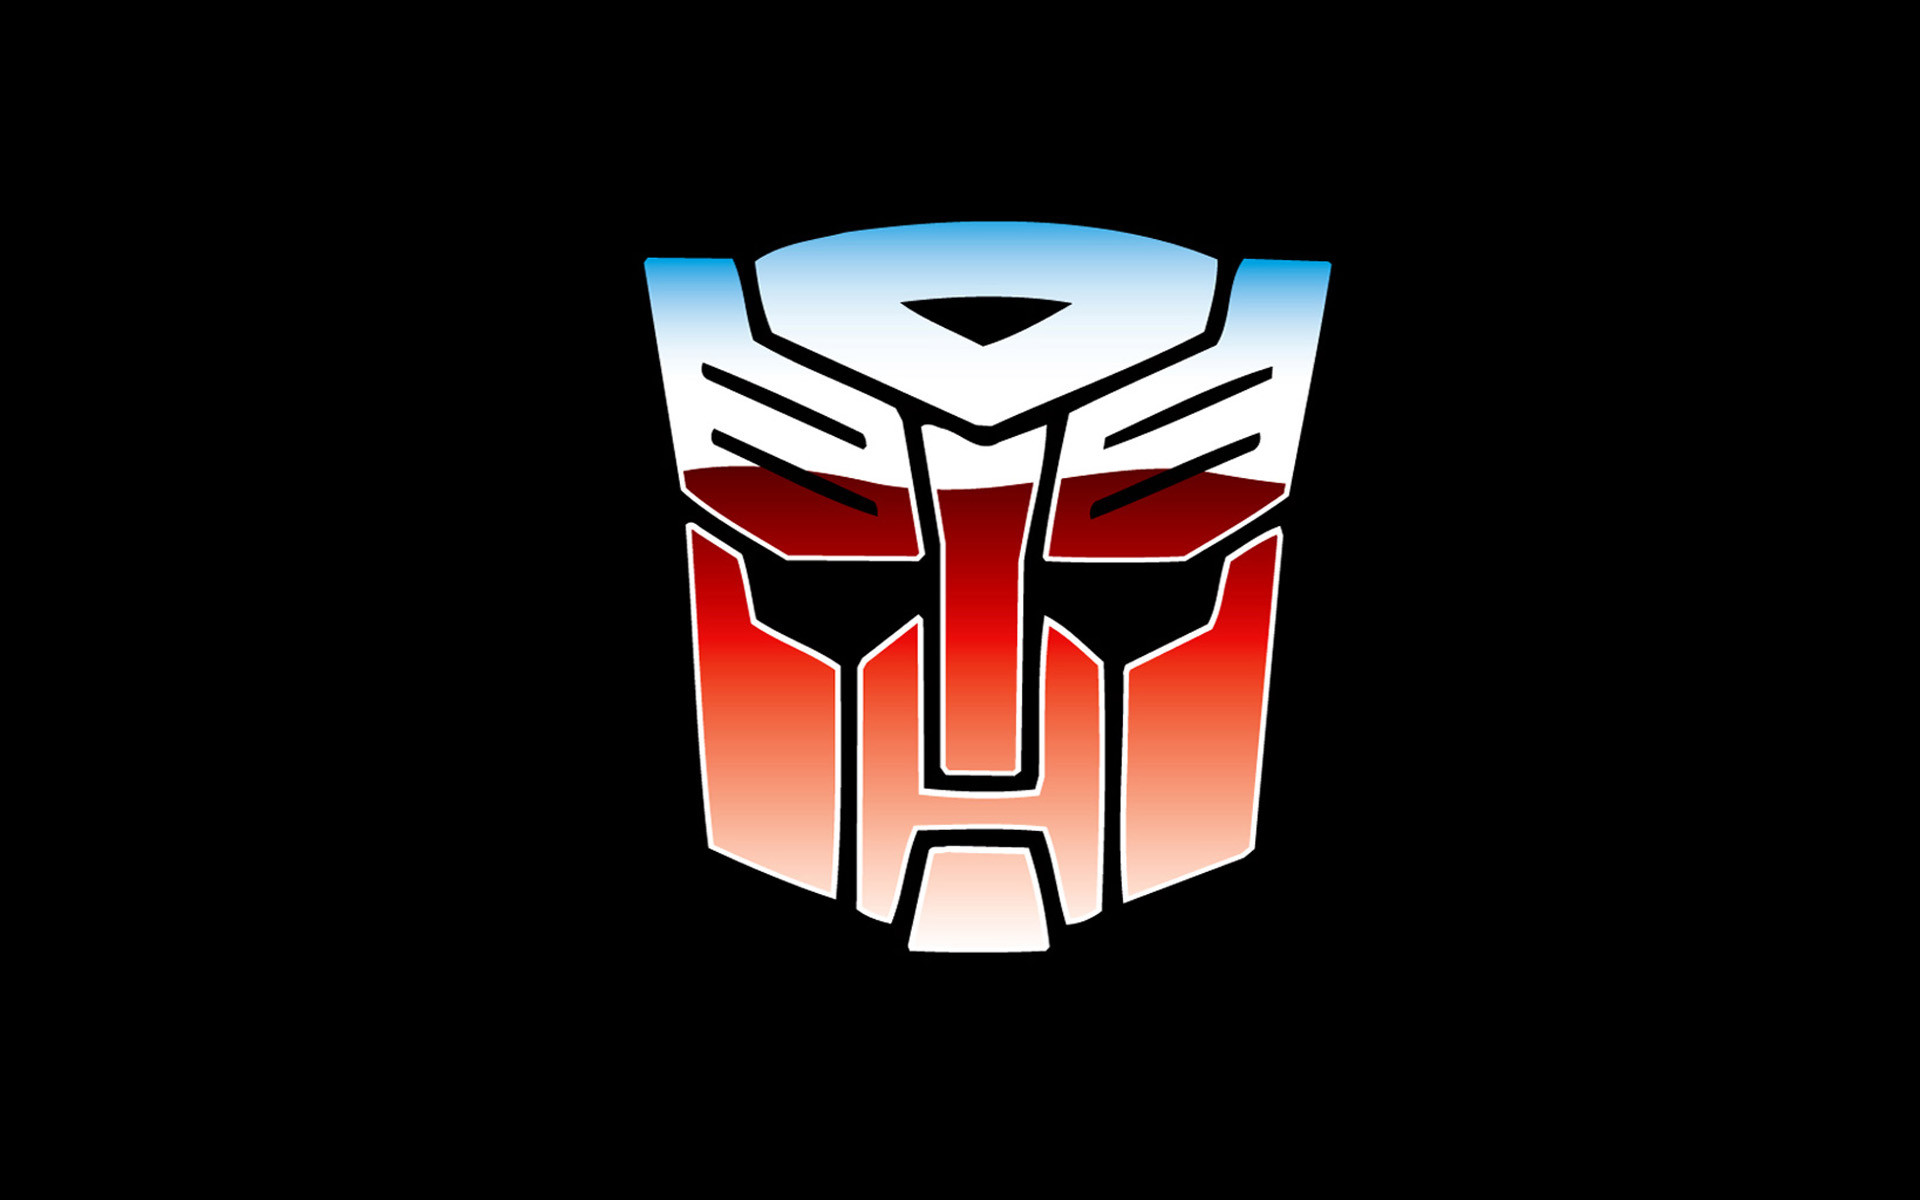 Transformers Autobot magnet - Optimus Prime - Bumblebee - Faction Insignia  | eBay